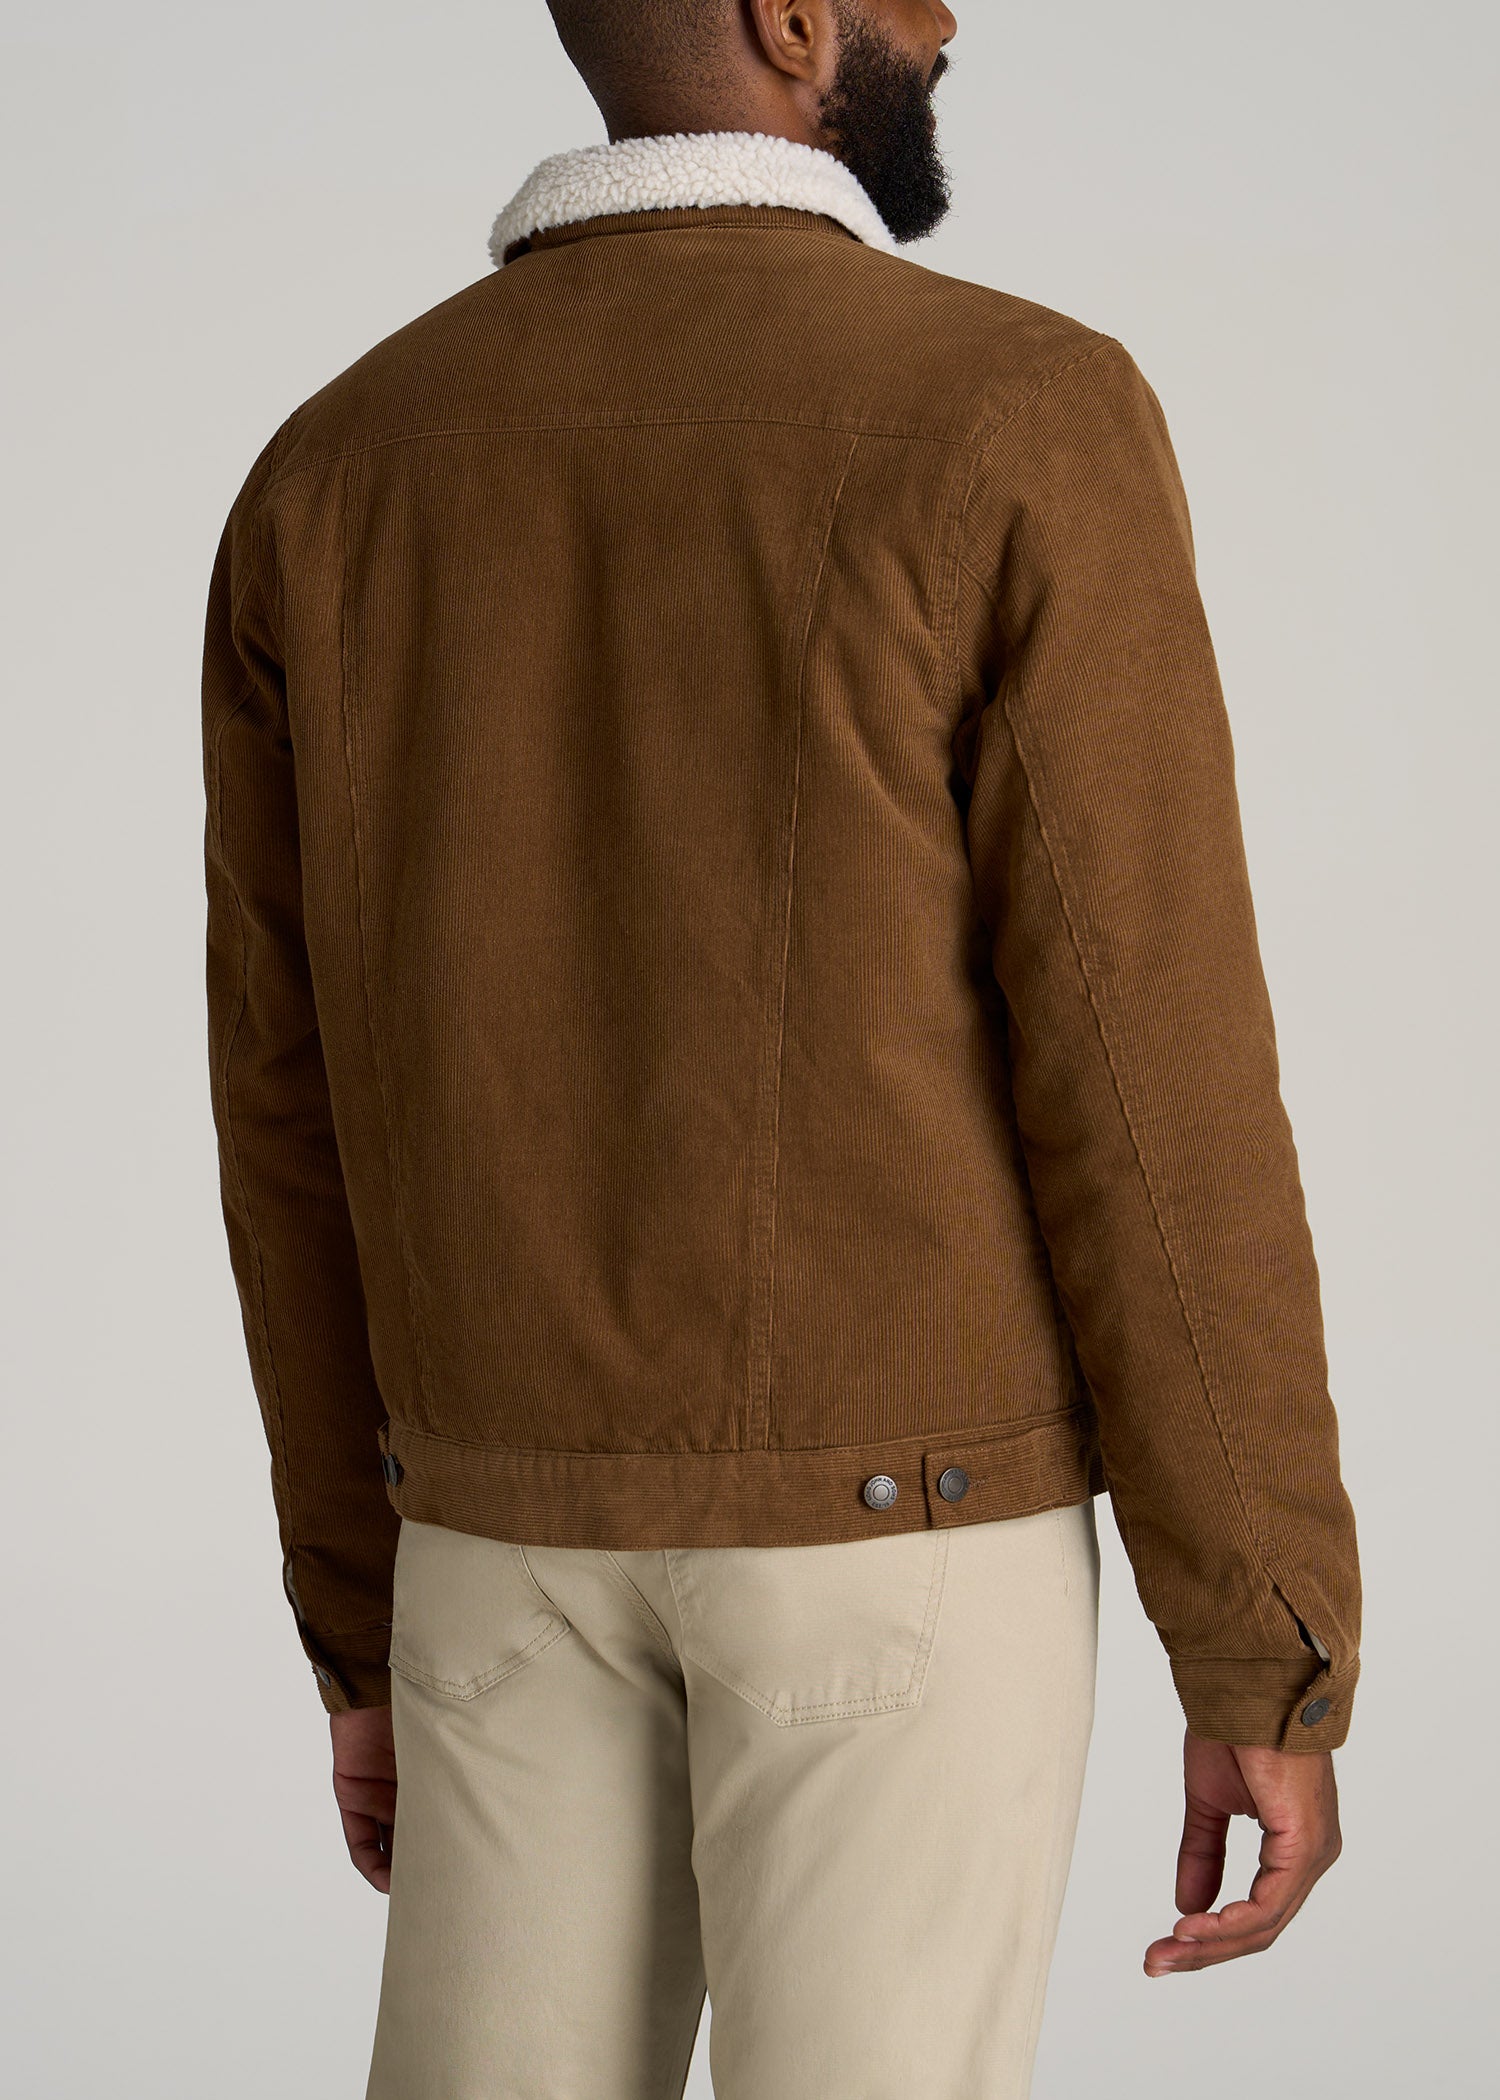 Men's faux shearling jacket with pocket, Pyjamas